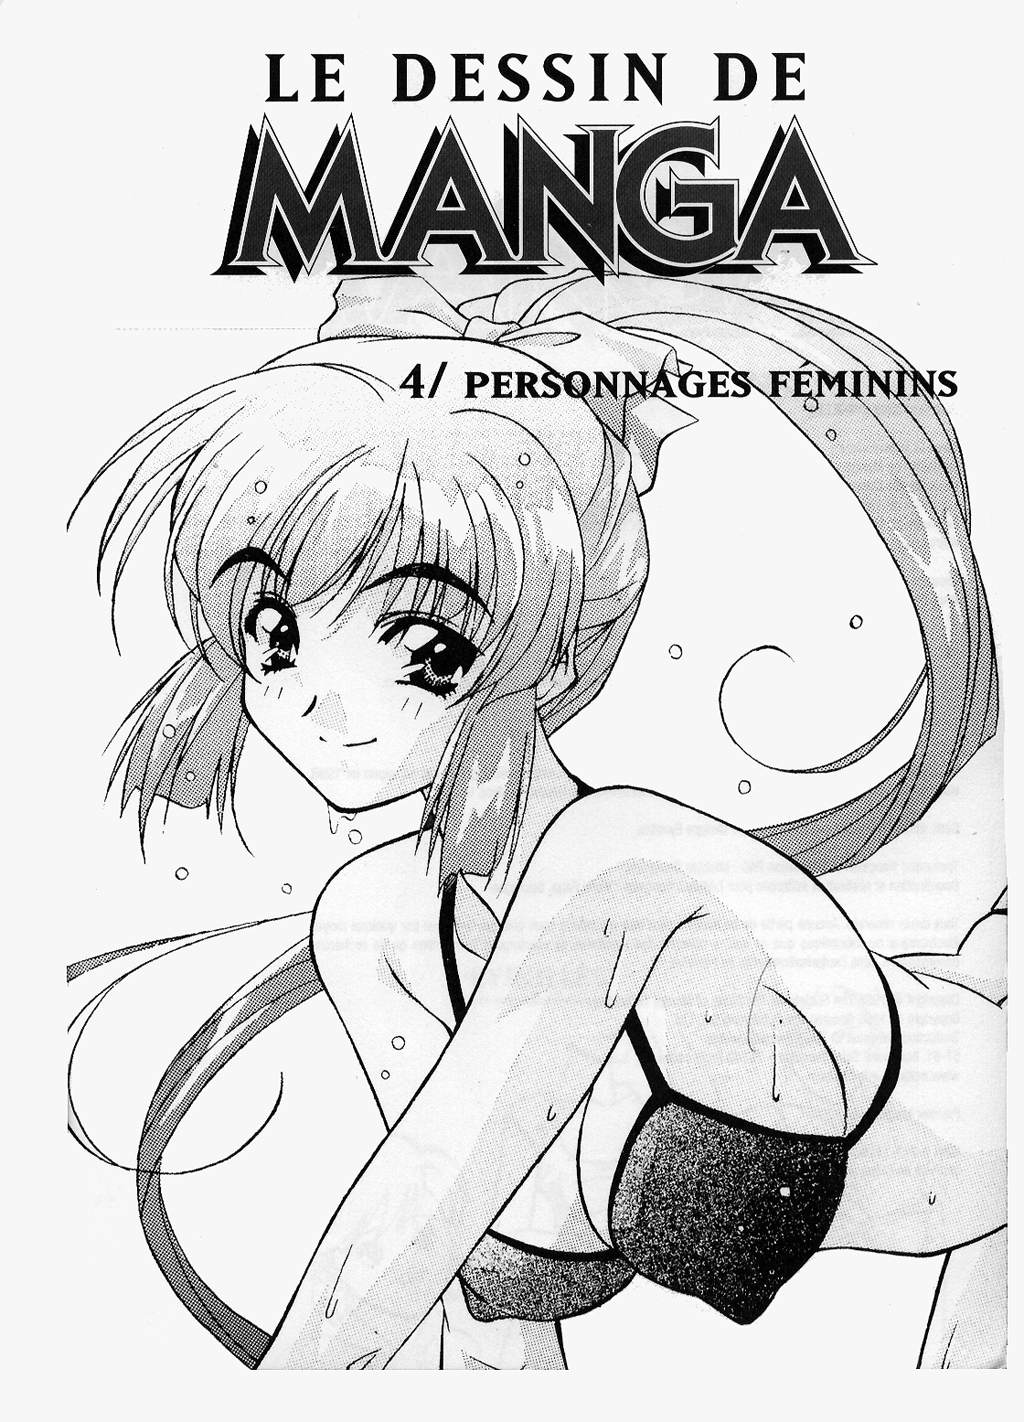 Le dessin du Manga 04 - Personnages feminin, Attitudes, Expressions numero d'image 1